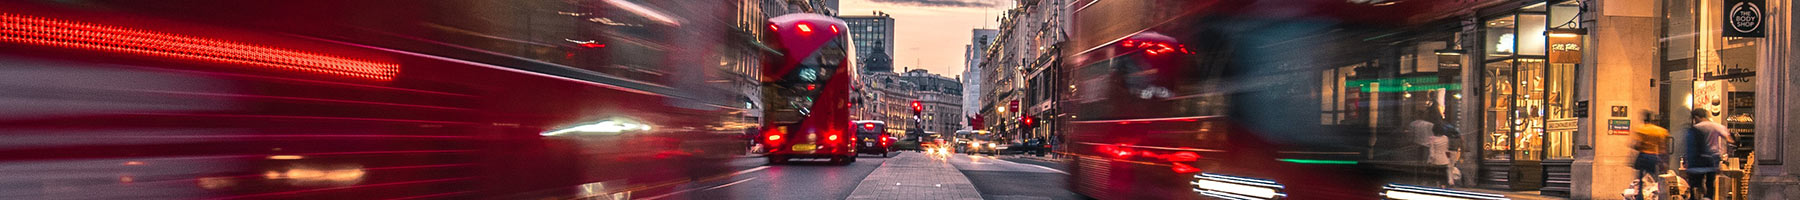 Double decker buses on a London street